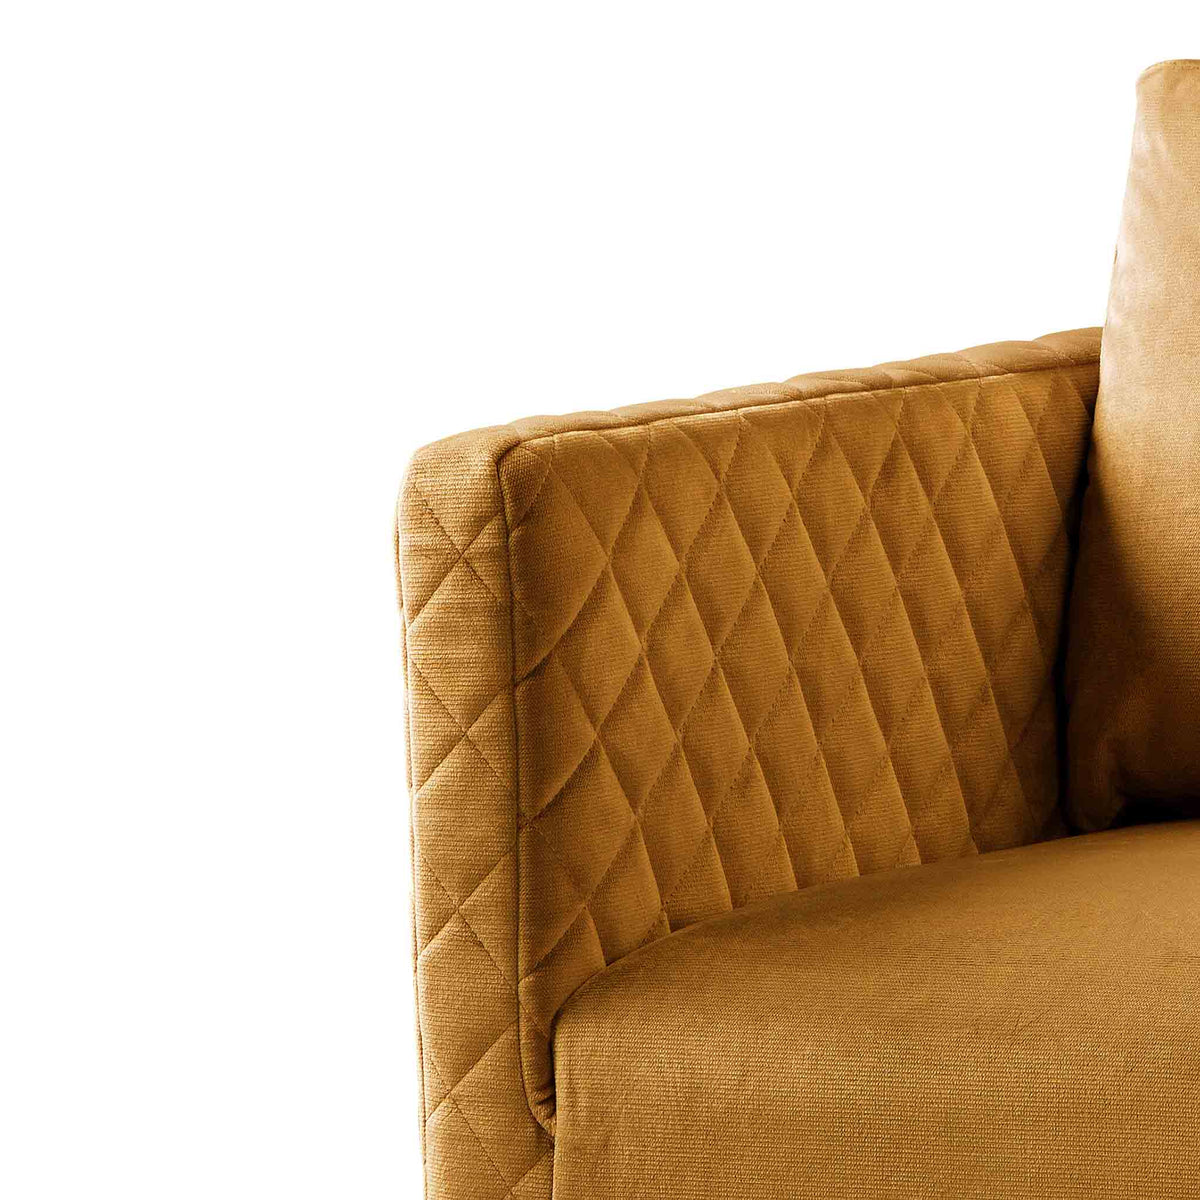 close up of the upholstered velvet fabric on the Bali Gold Velvet Accent Chair